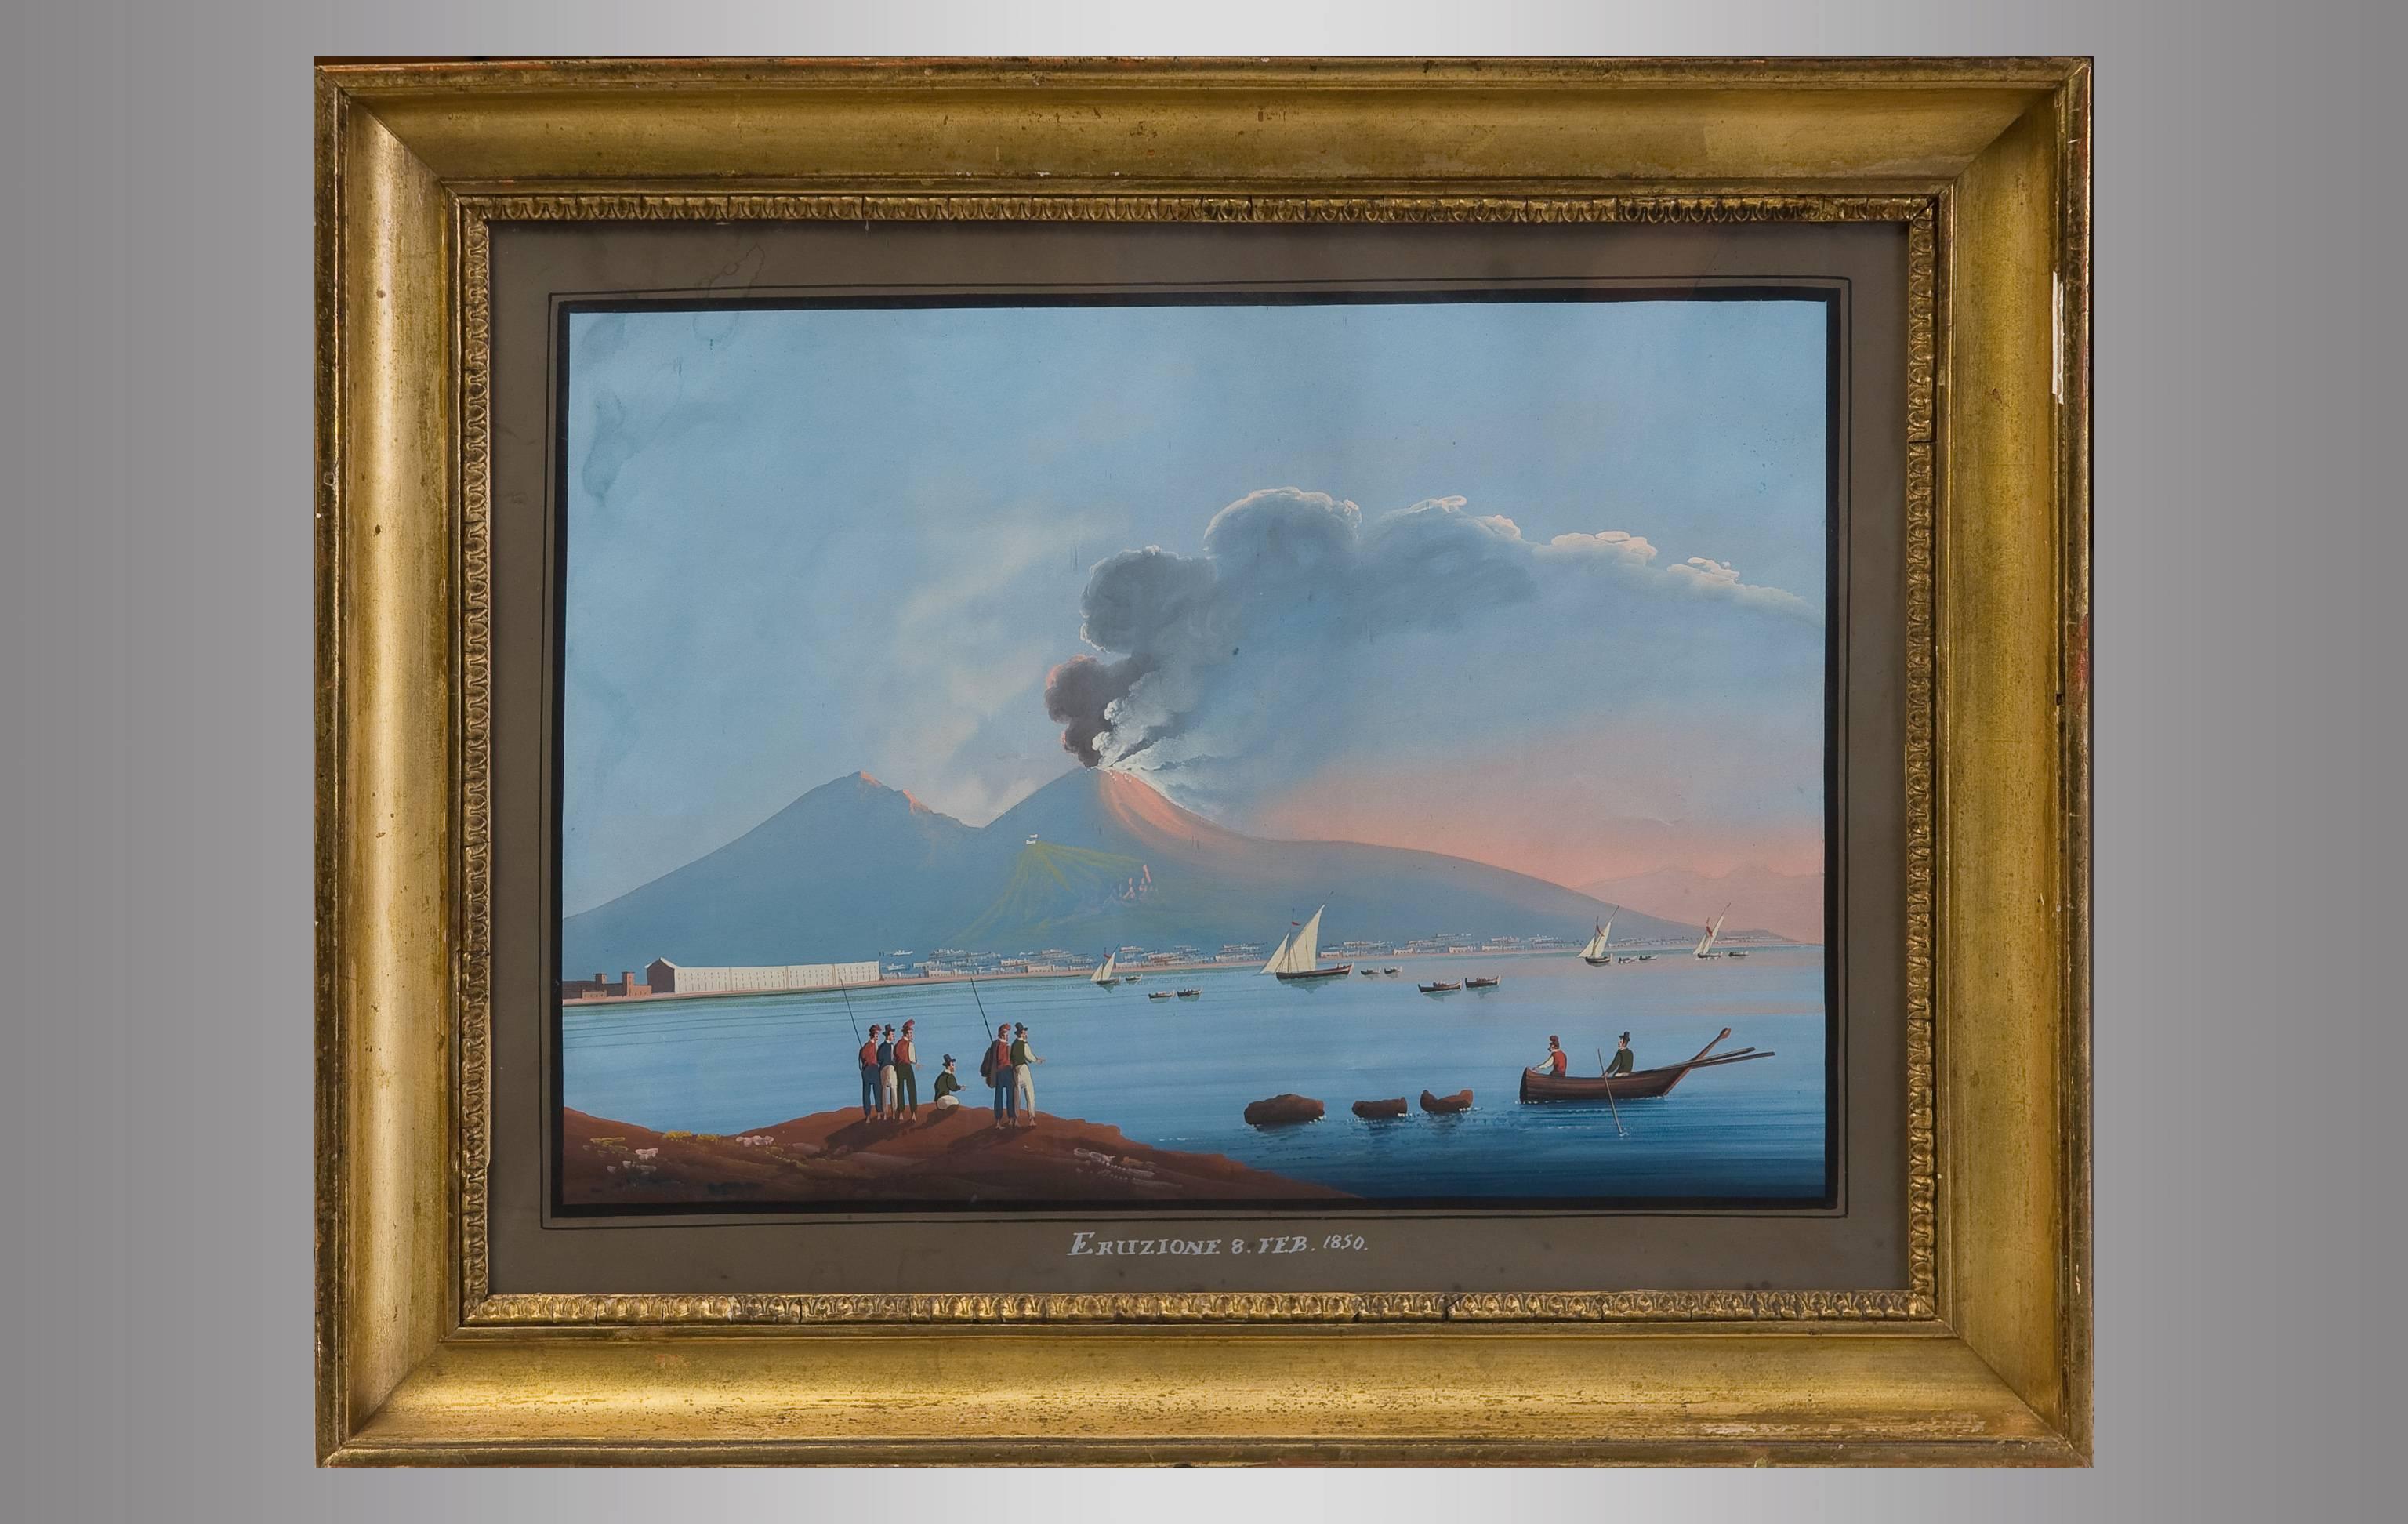 Pair of Neapolitan Gouache ''Eruzione 8 de Febrero de 1850,''
19th century.
Views of Vesuvius eruption, day and night.
Original framed.

